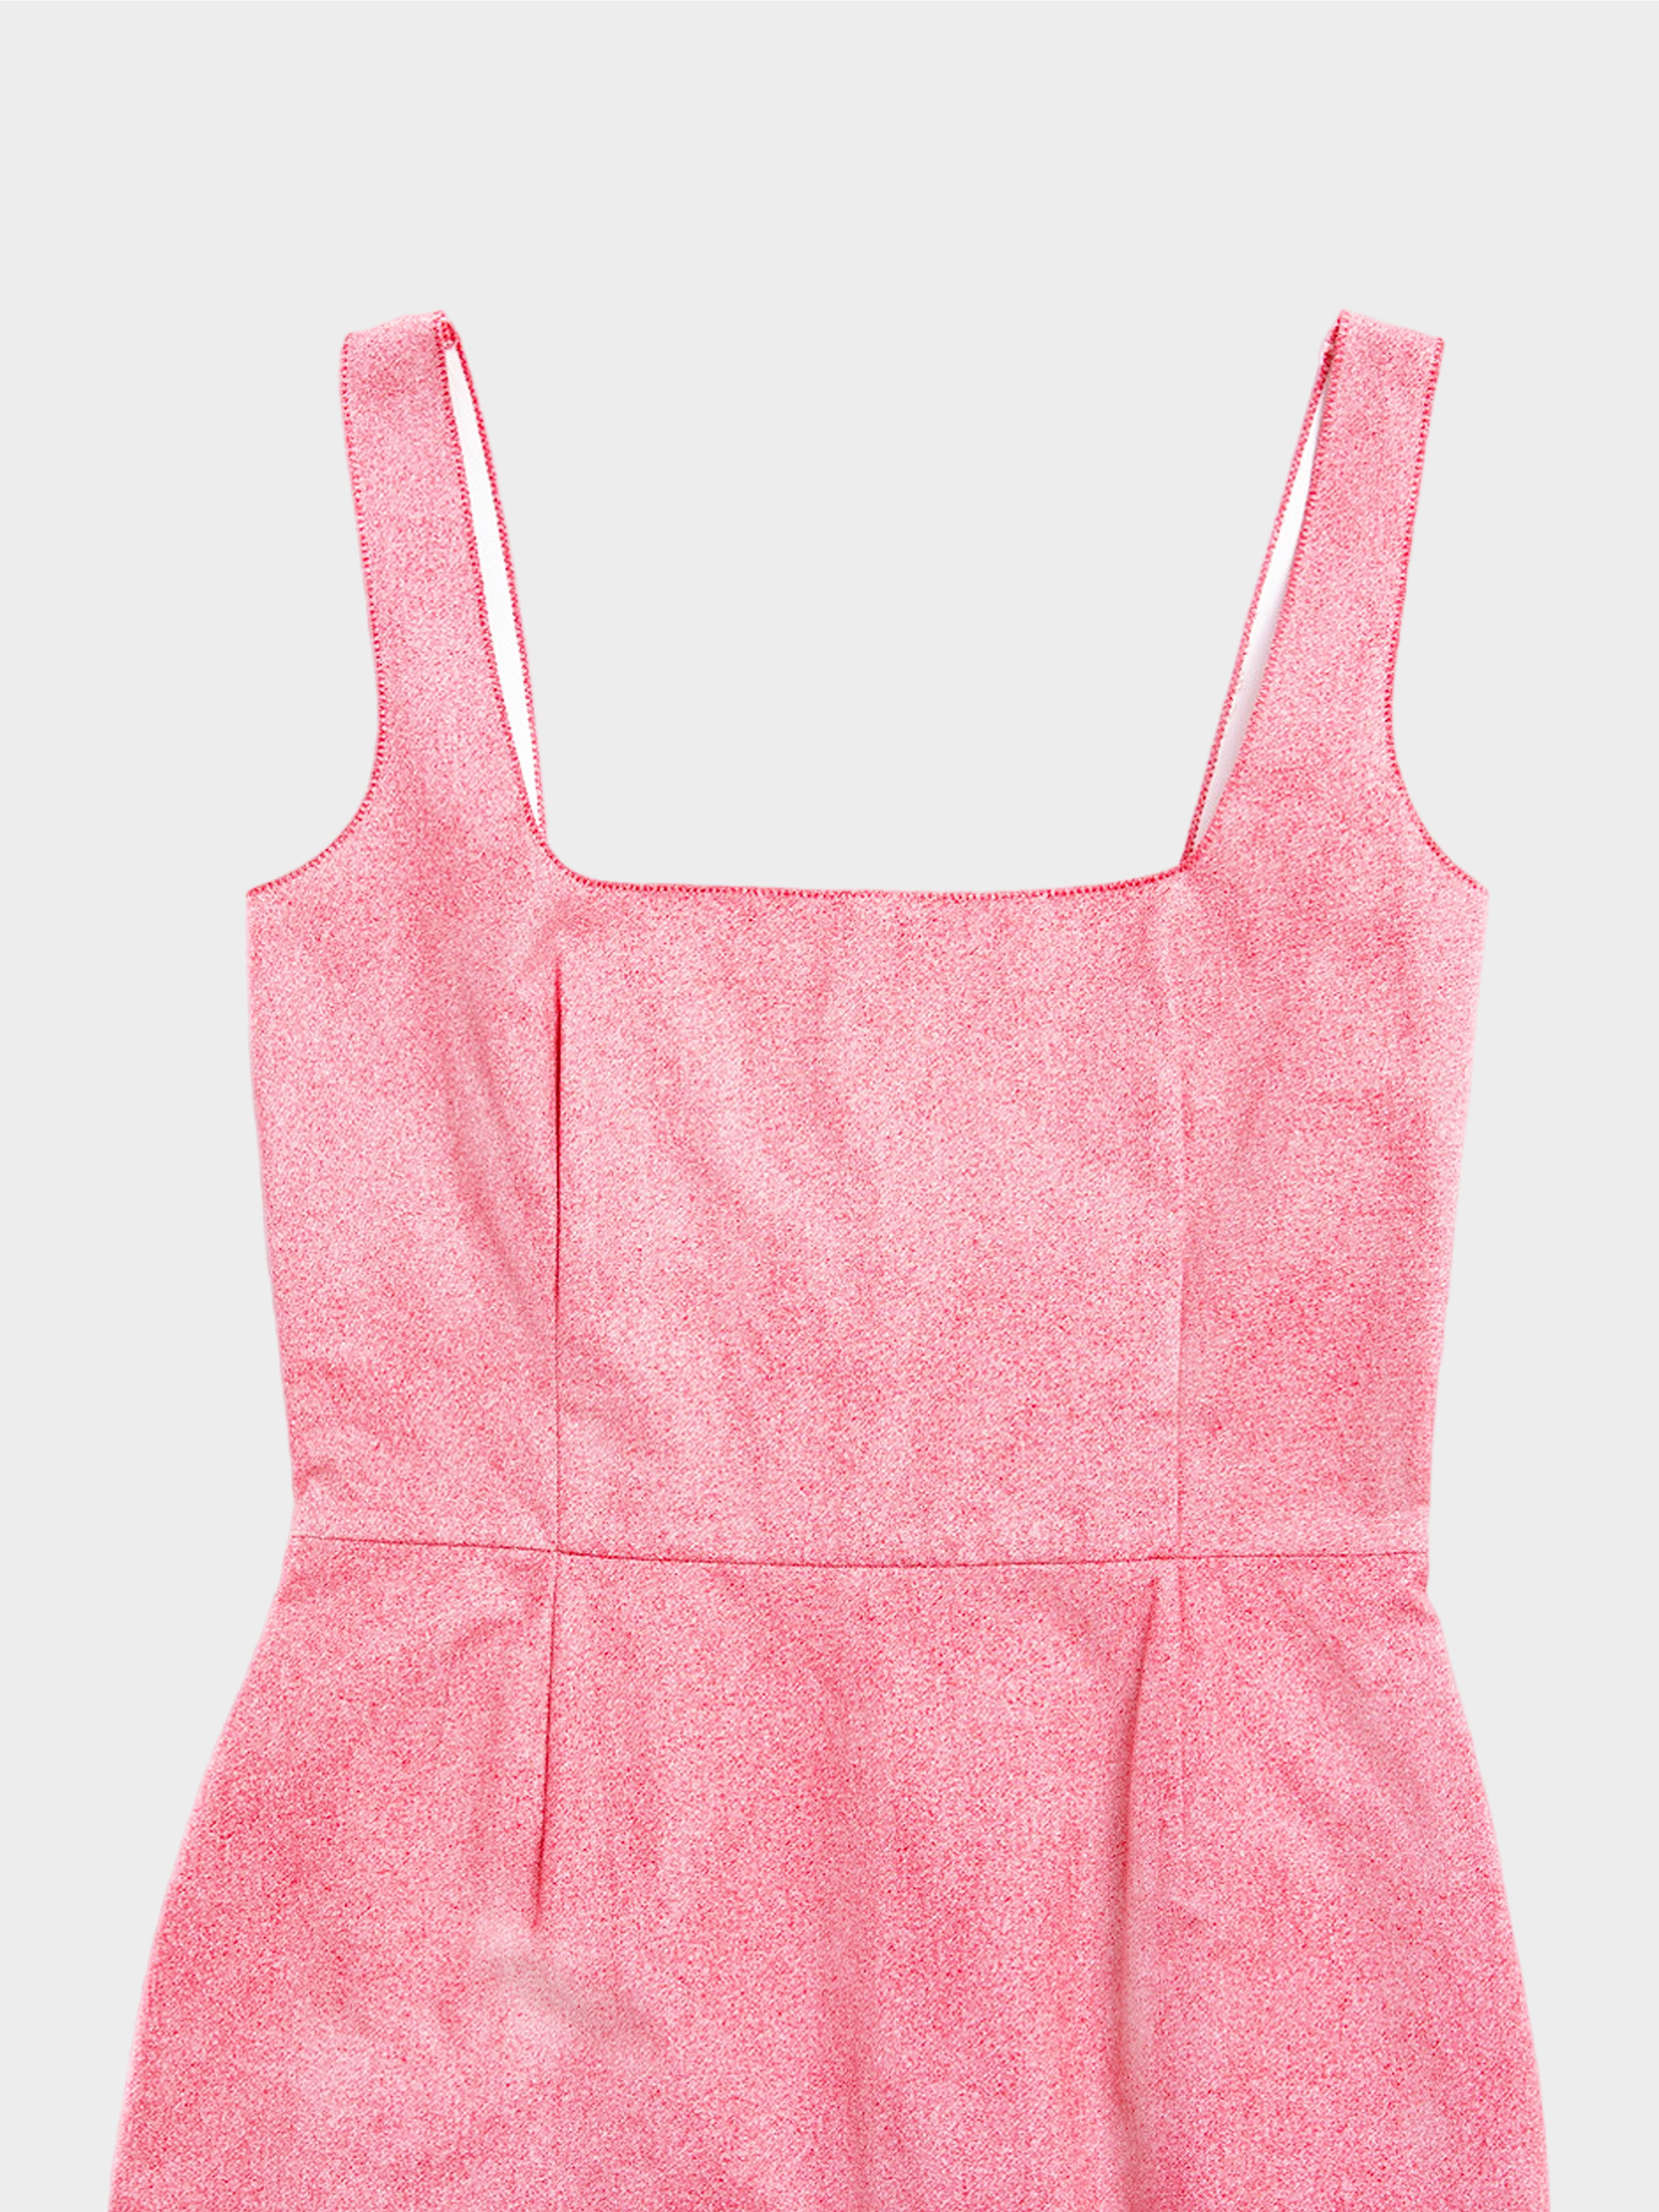 Miu Miu SS 1998 Pink Square Neck Dress